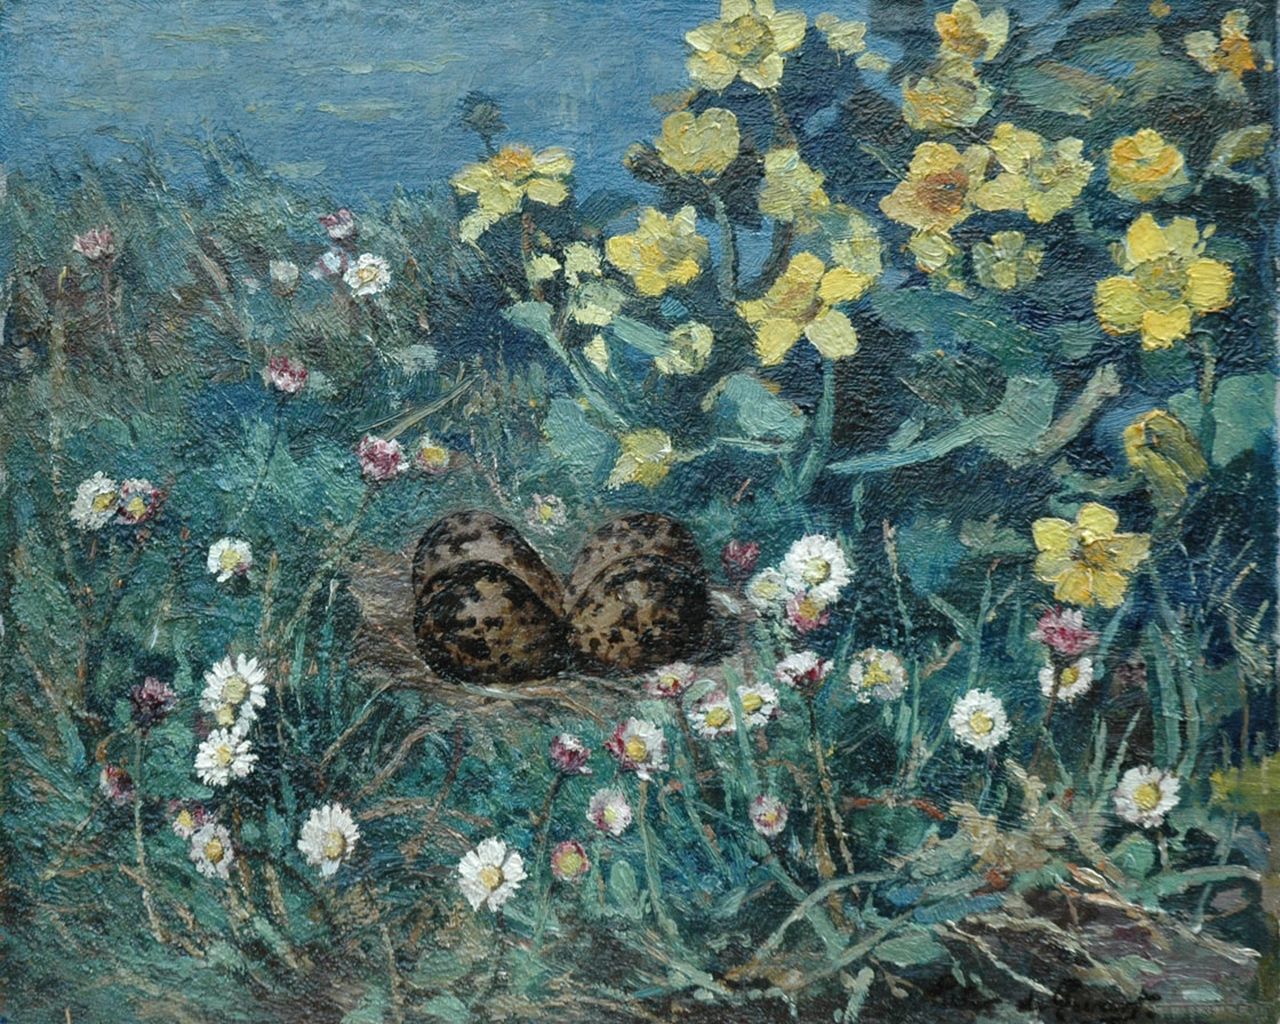 Zwart P.M.A. de | Petrus Martinus Antonius 'Pieter' de Zwart, Plover's egg between fieldflowers, Öl auf Leinwand 34,5 x 42,3 cm, signed l.r.